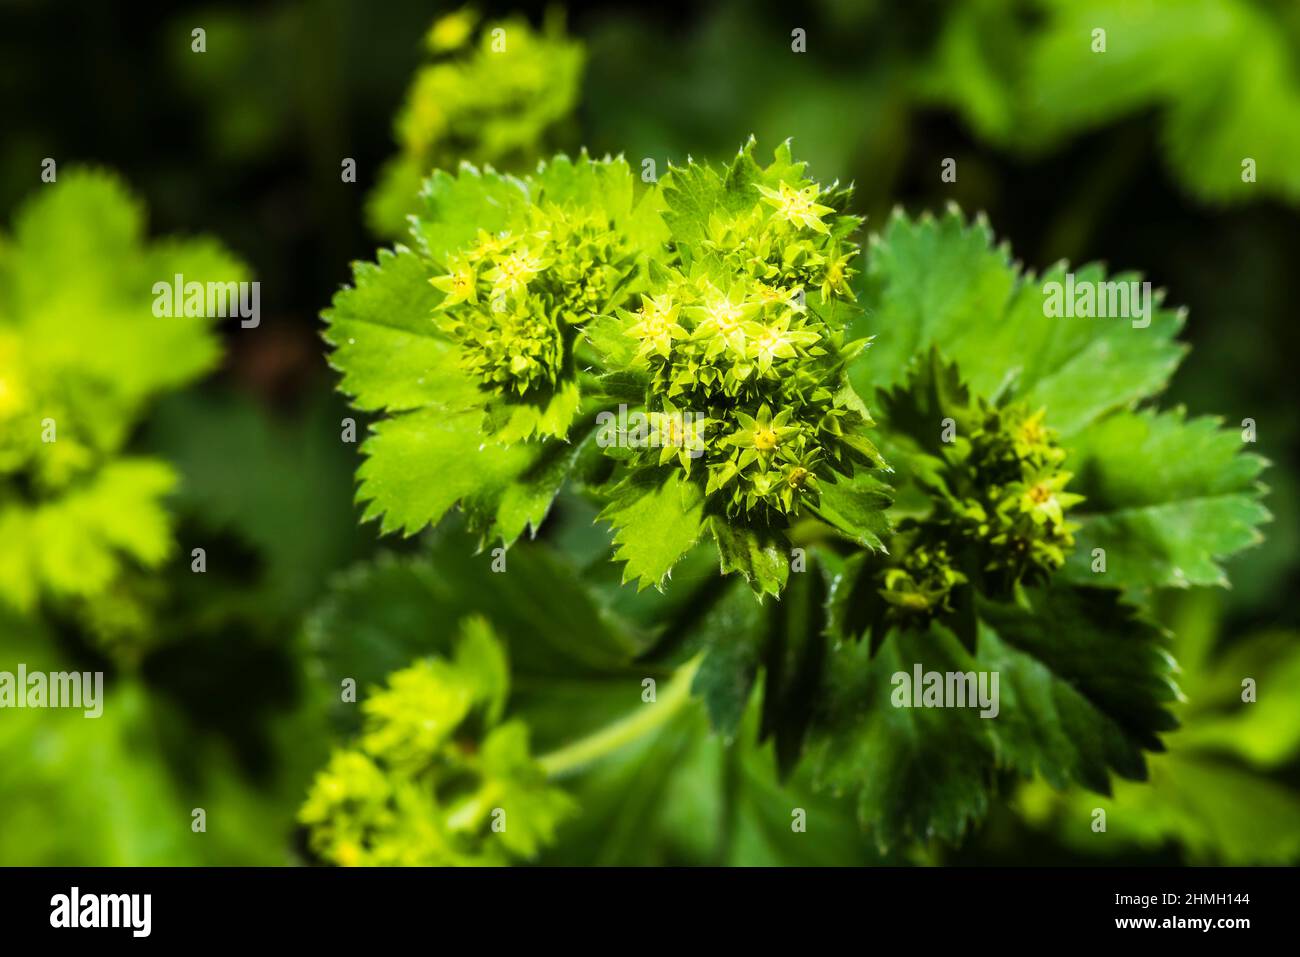 Close-up of an Alchemilla mollis green flower head in a north London spring garden, London, UK Stock Photo